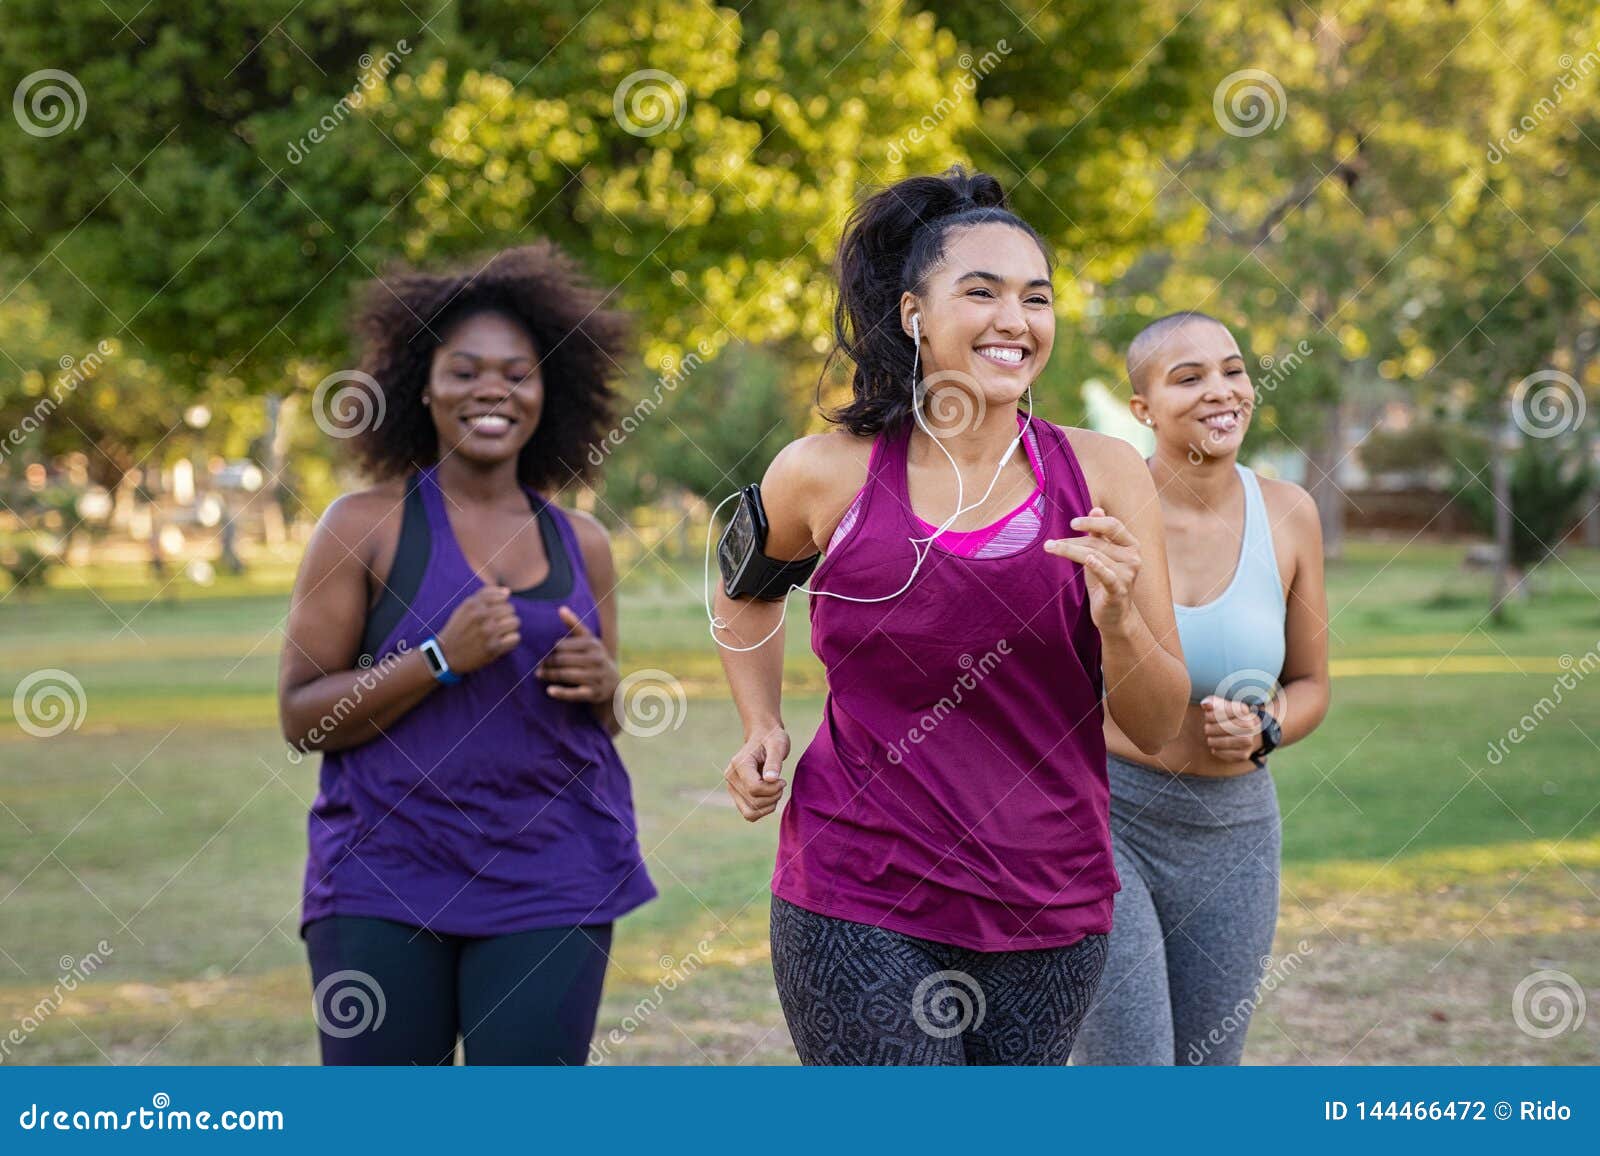 active curvy women jogging